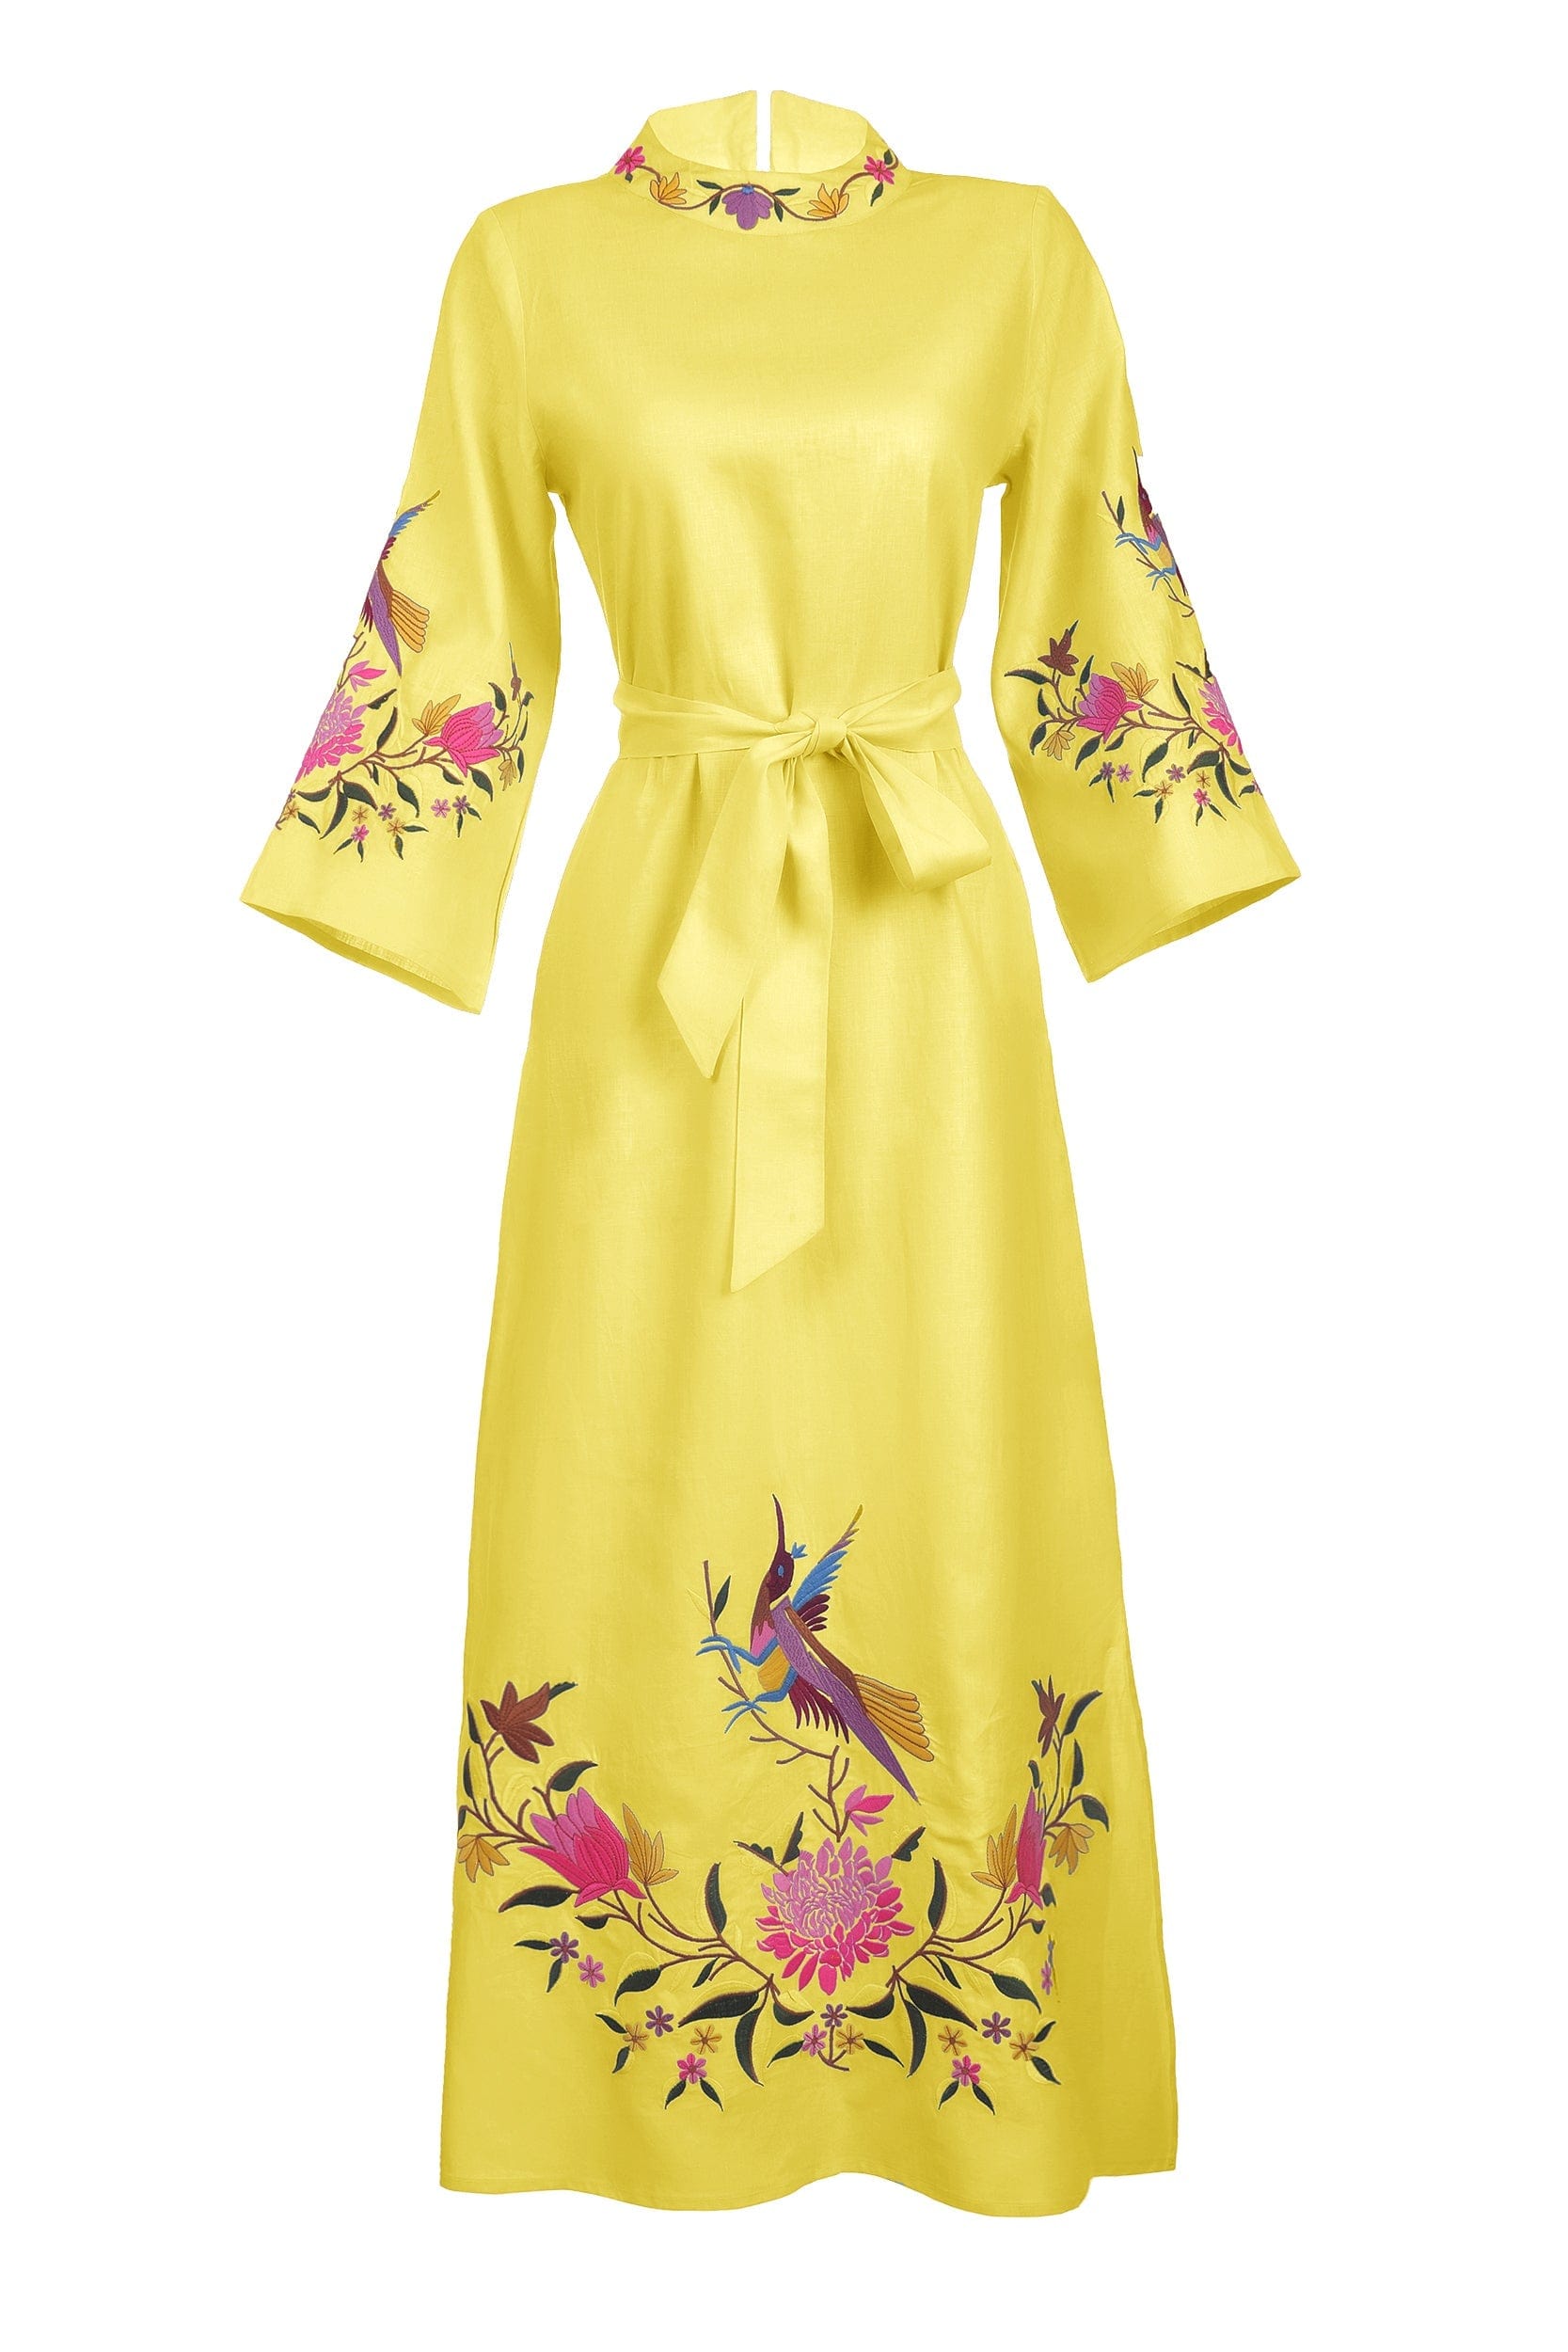 Fanm Mon Dress L / Bright Yellow Asia